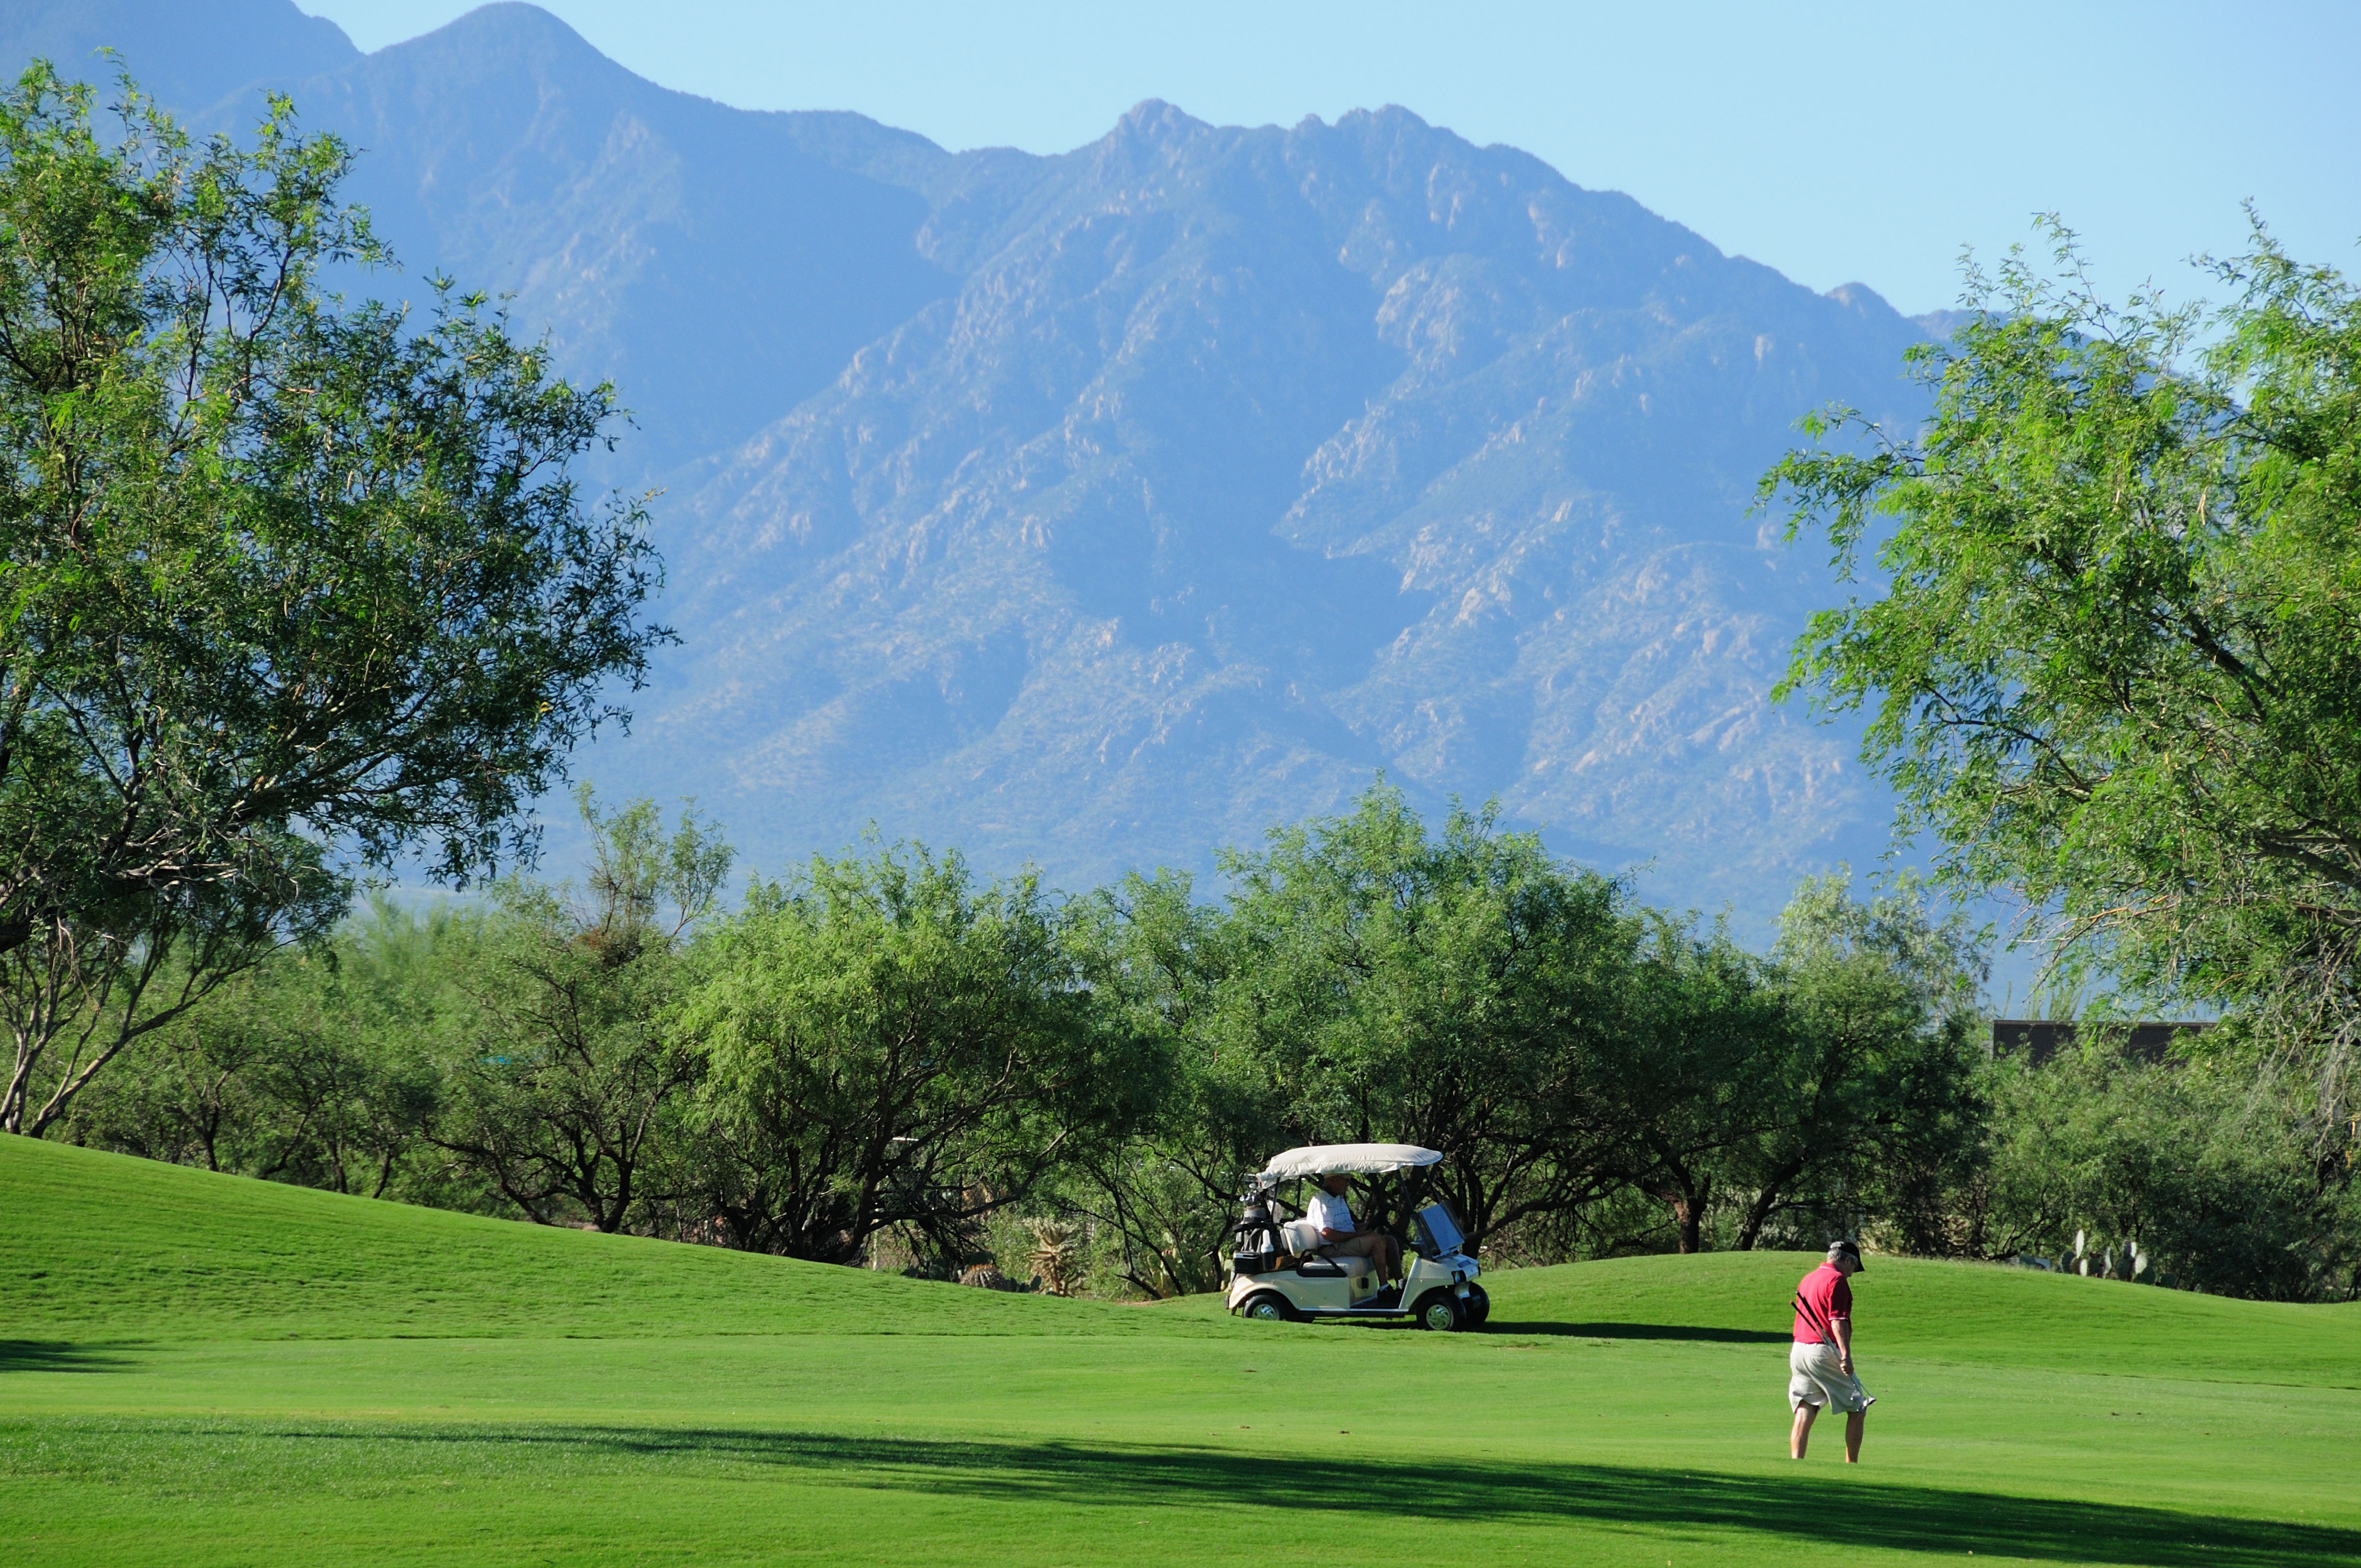 The Santa Rita Mountains in the Sonoran Desert serve as a backdrop for Quail Creek Golf Course in Green Valley, Arizona.